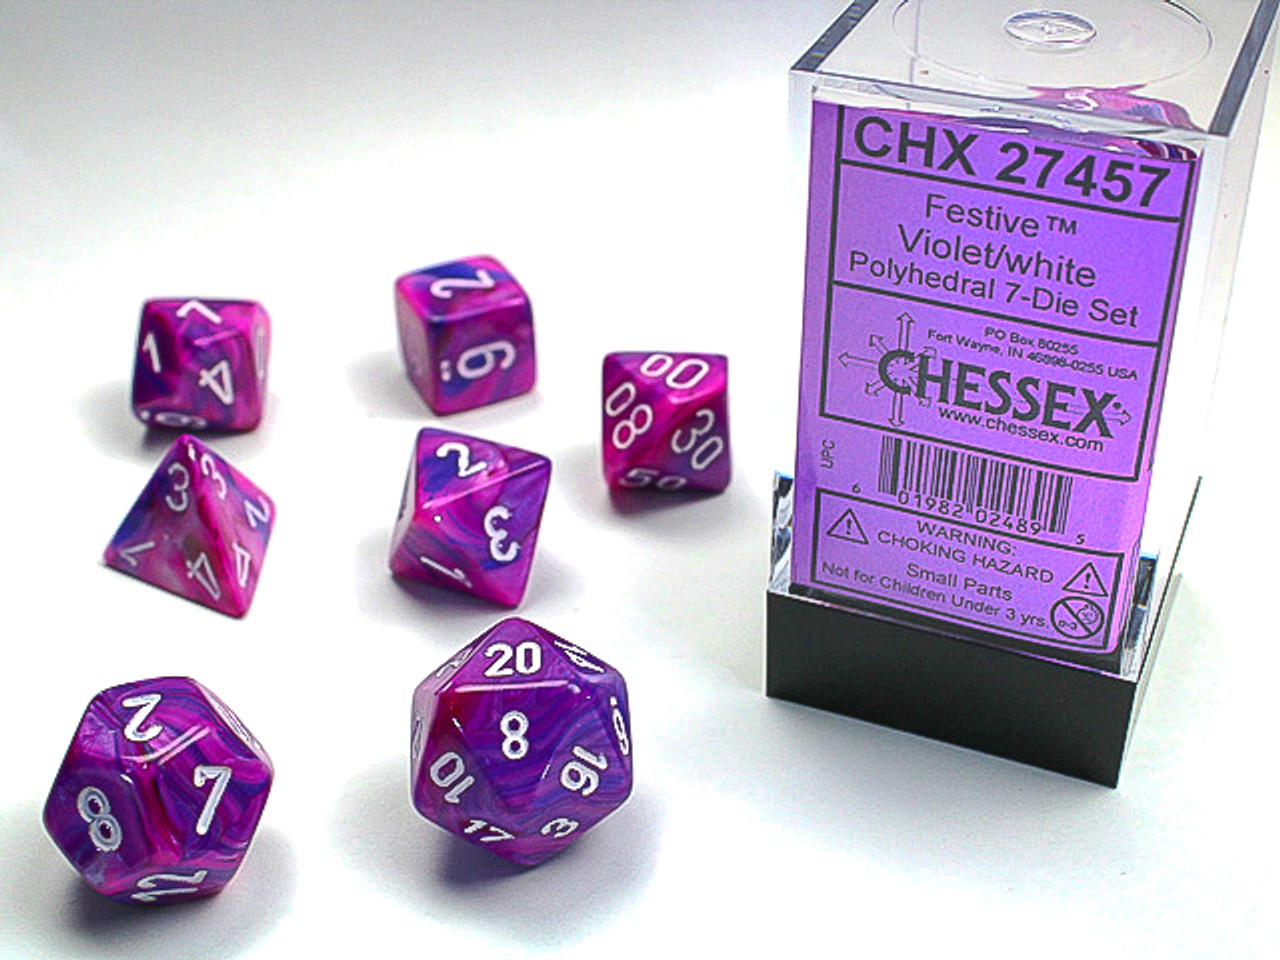 27457 - Festive® Polyhedral Violet/white 7-Die Set